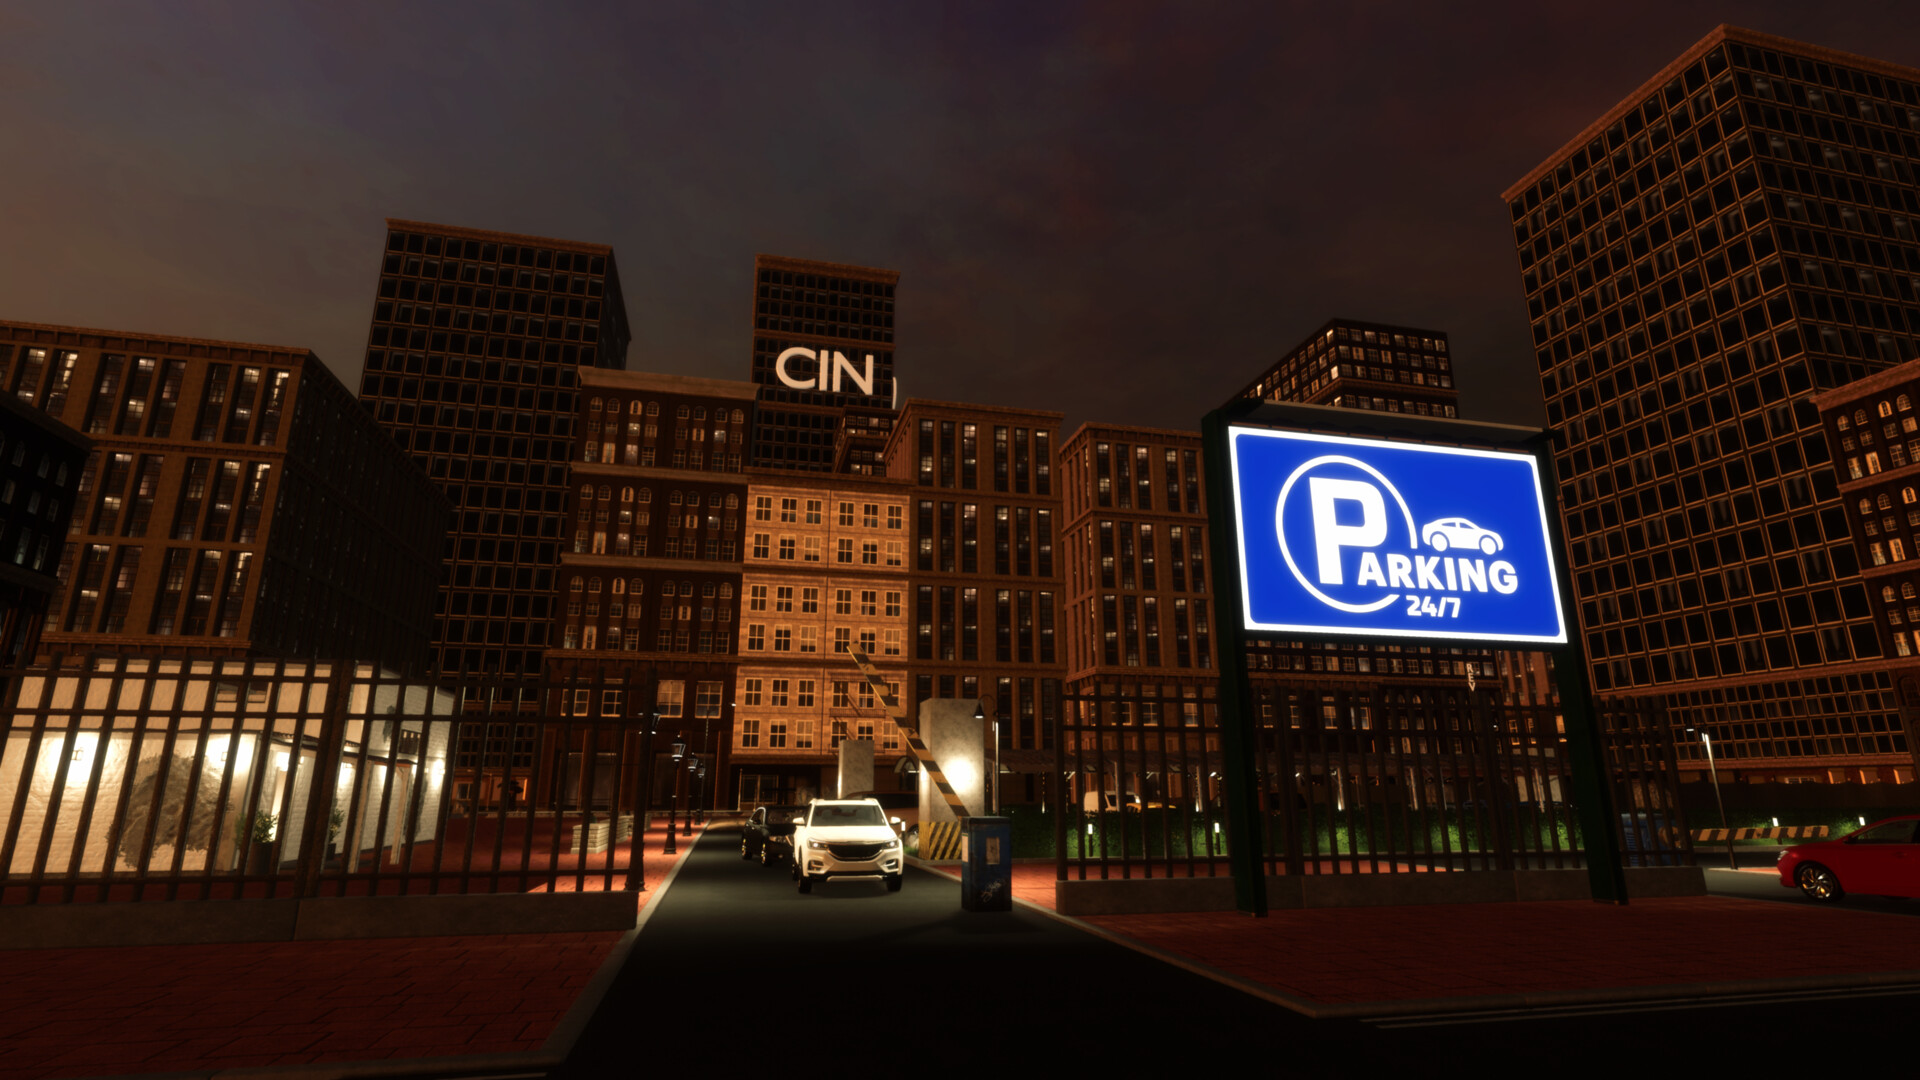 Parking Tycoon: Business Simulator Steam CD Key